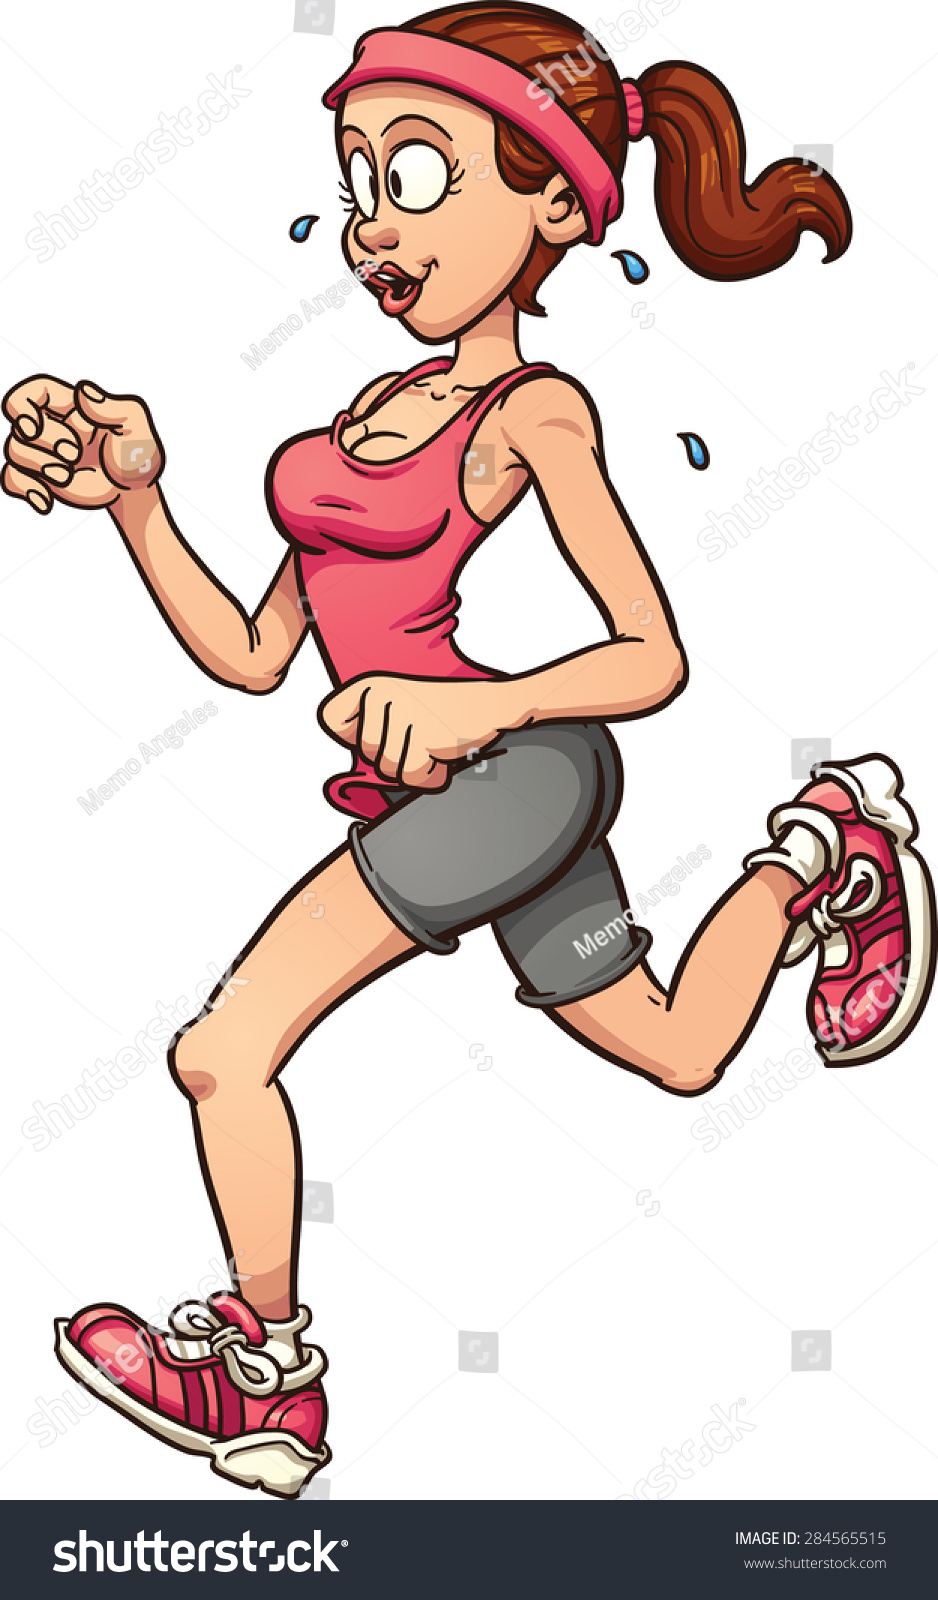 clipart girl jogging - photo #40